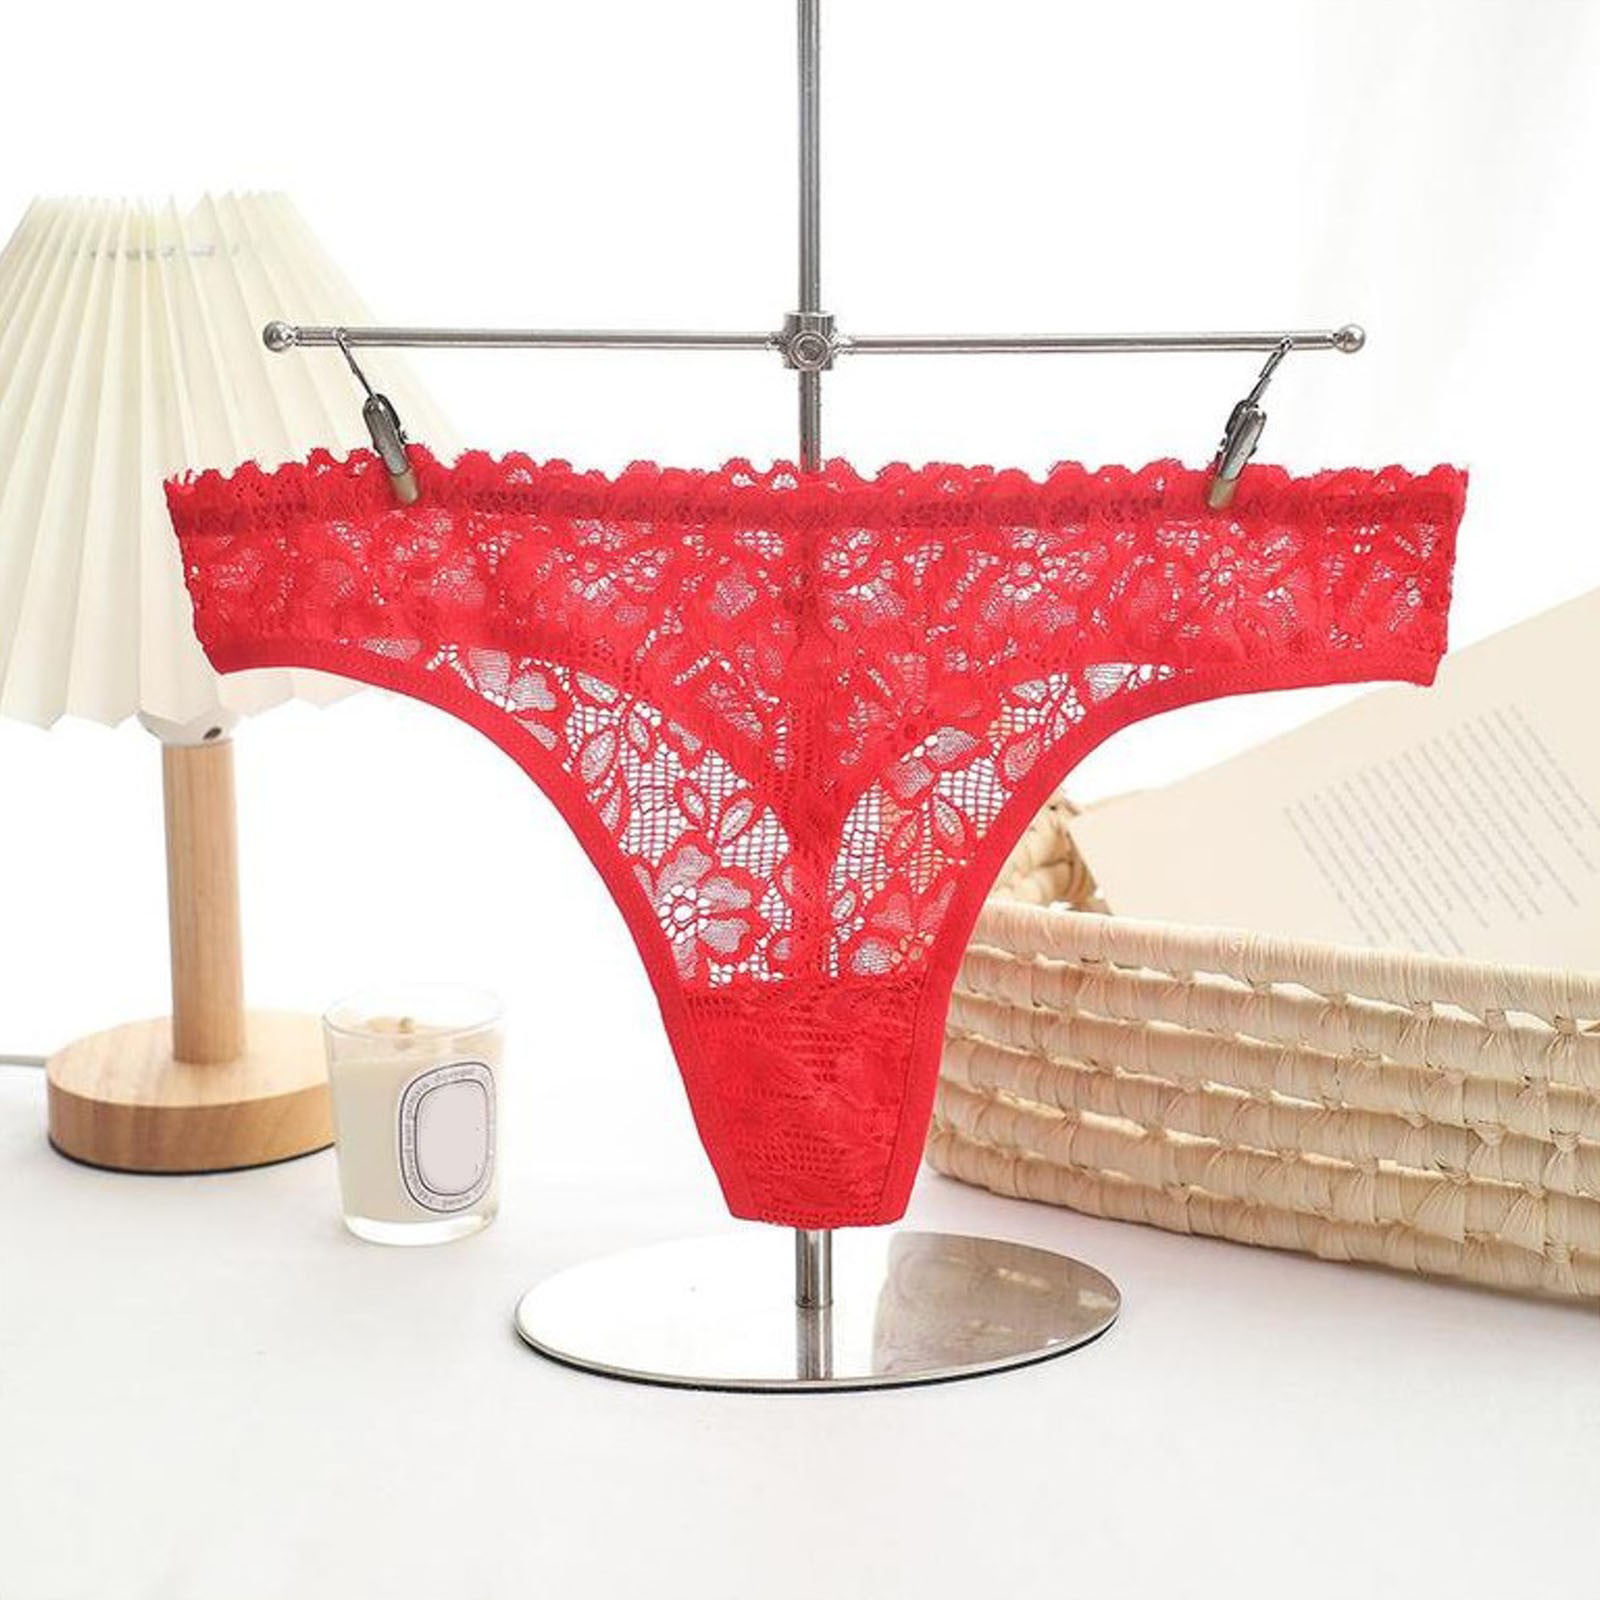 zuwimk Panties For Women,Women Thong Cotton Panty Low Cut Seamless Underwear  Red,XXL 